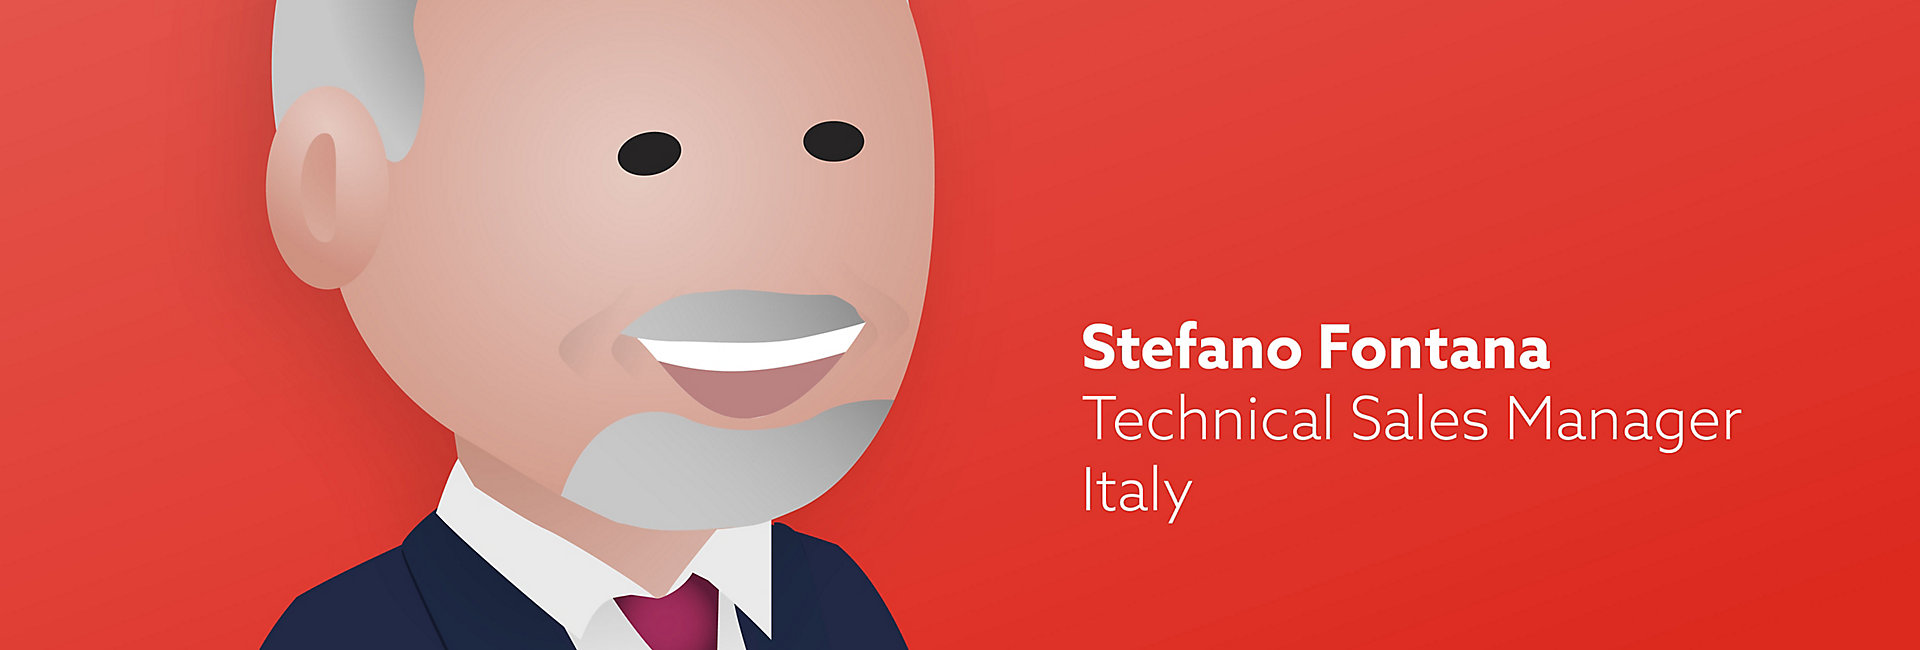 Employee in the spotlight: Stefano Montana